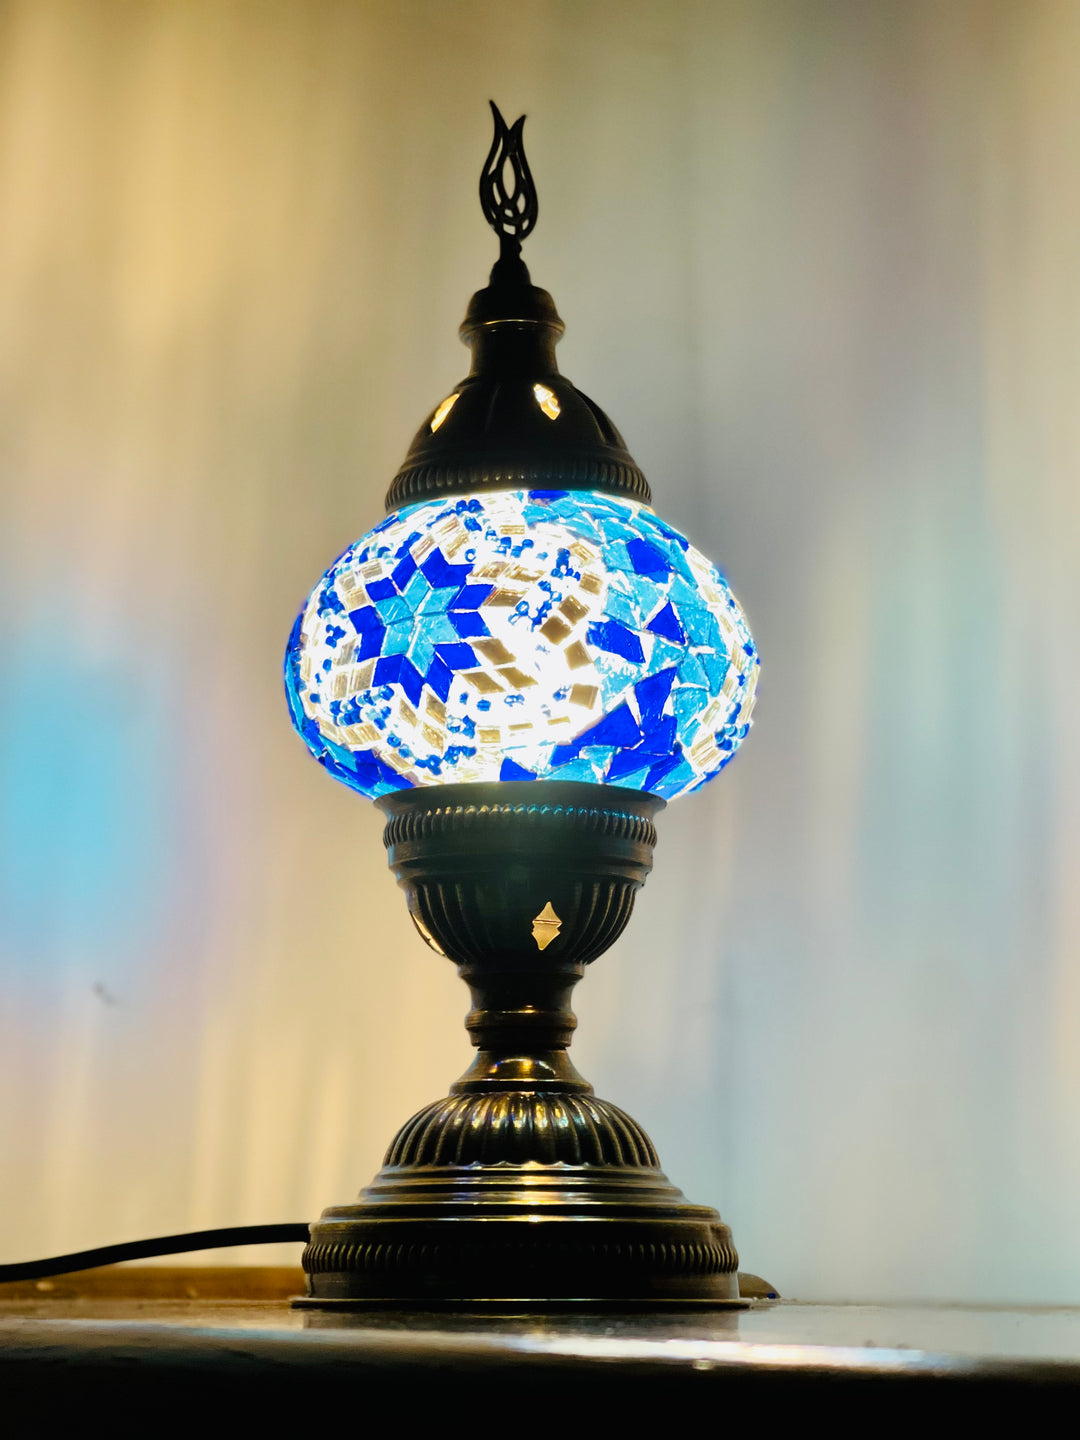 Turkish mosaic table lamp, bottom right angle